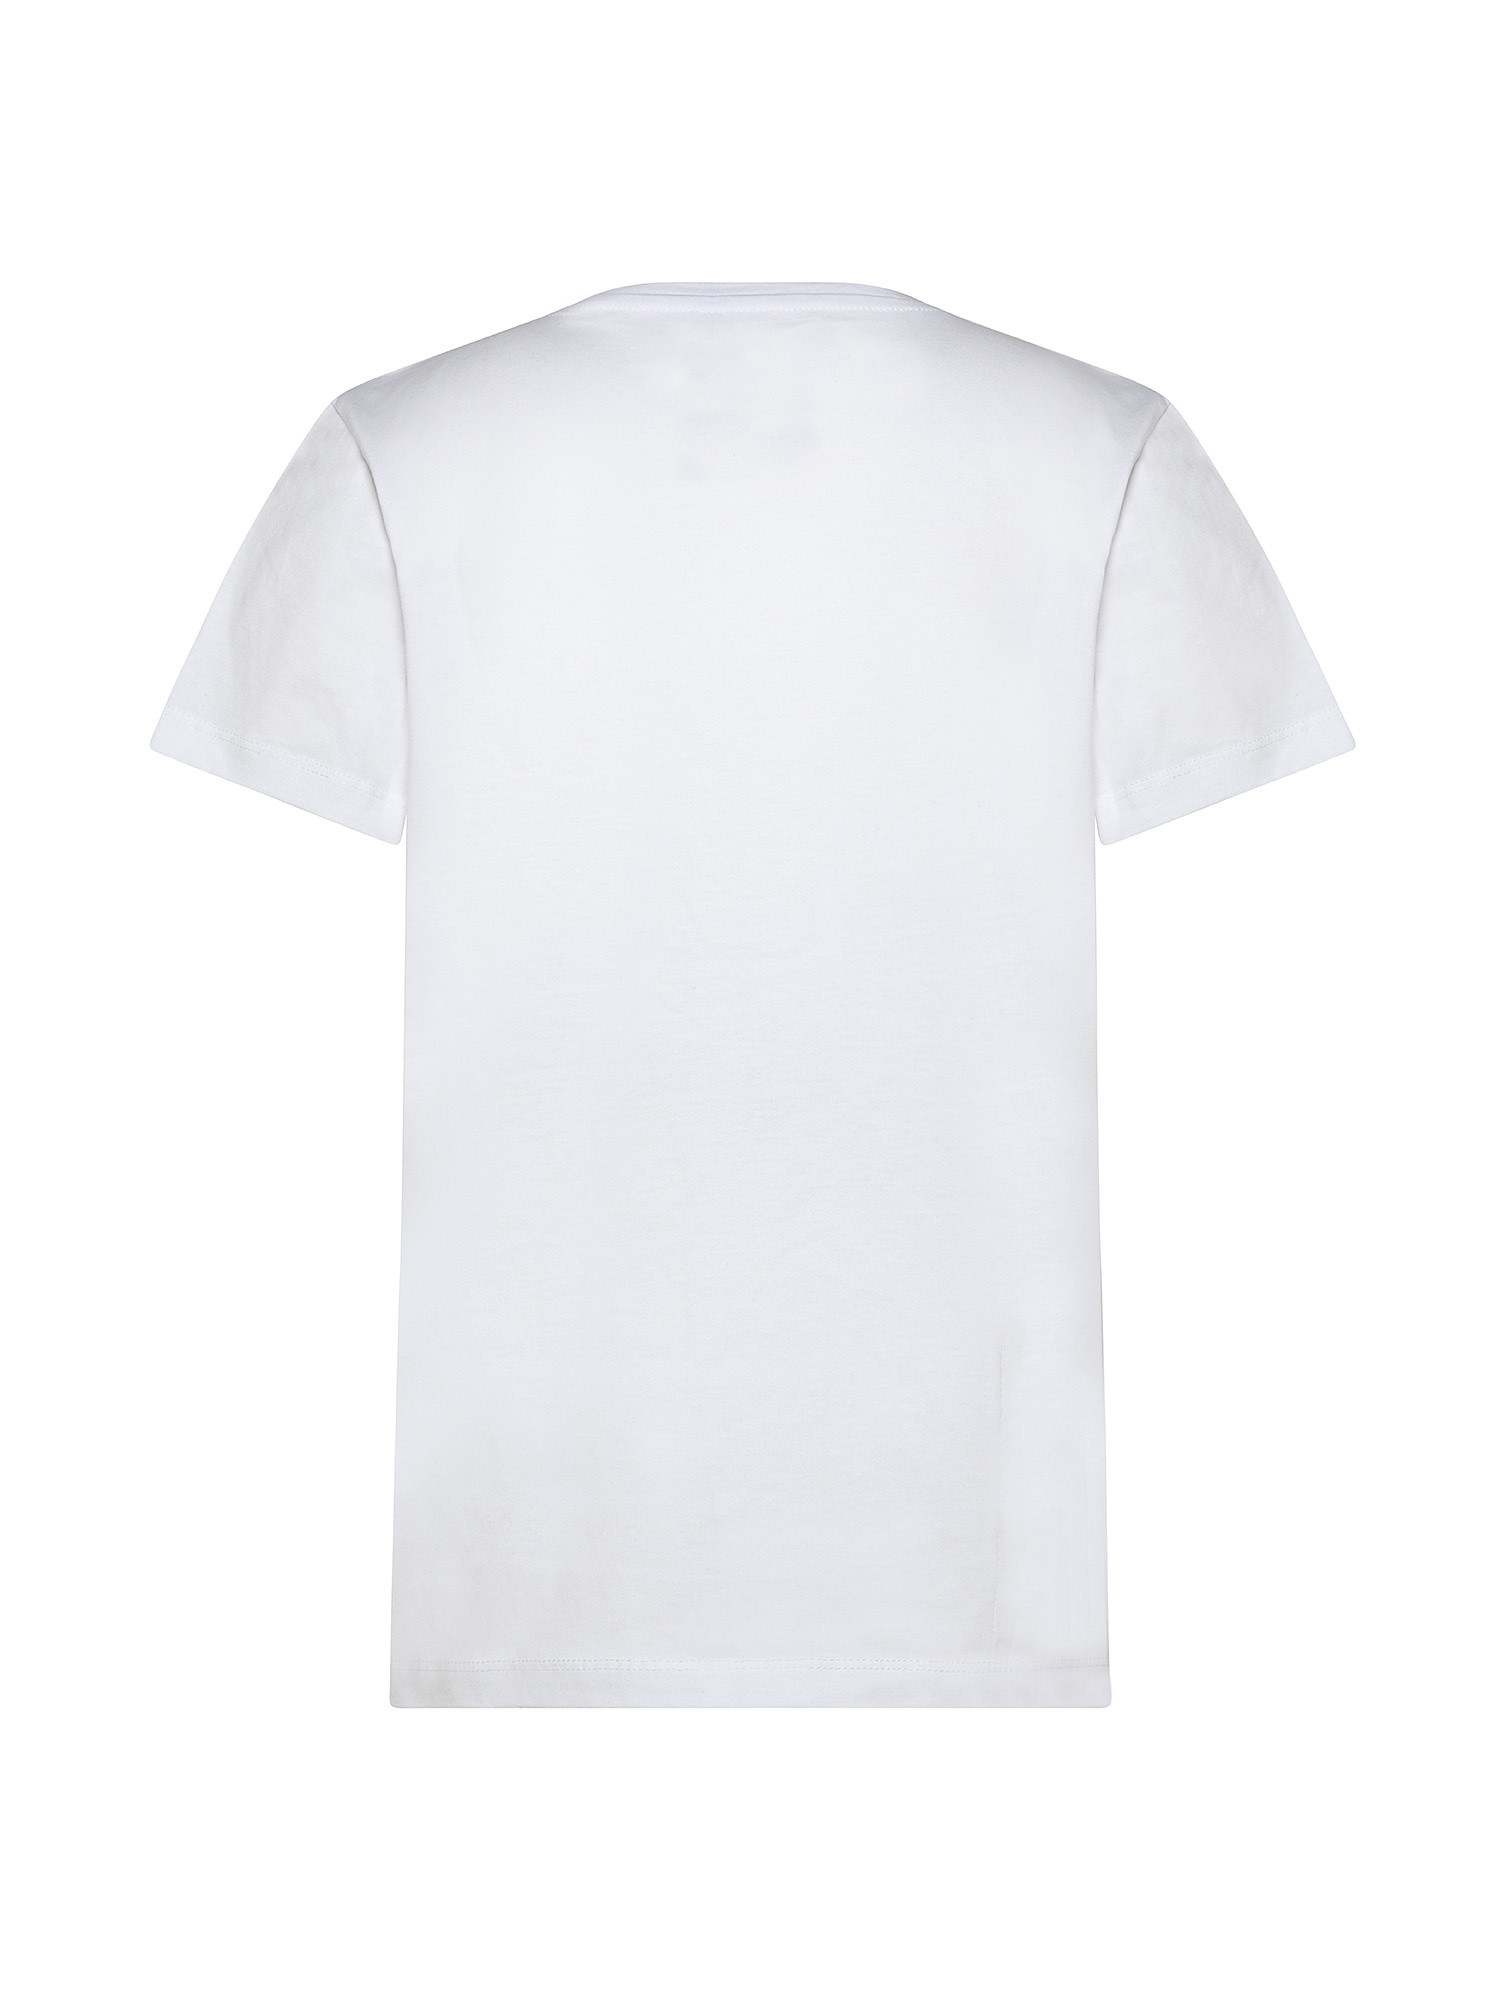 Regular fit boy t-shirt, White, large image number 1